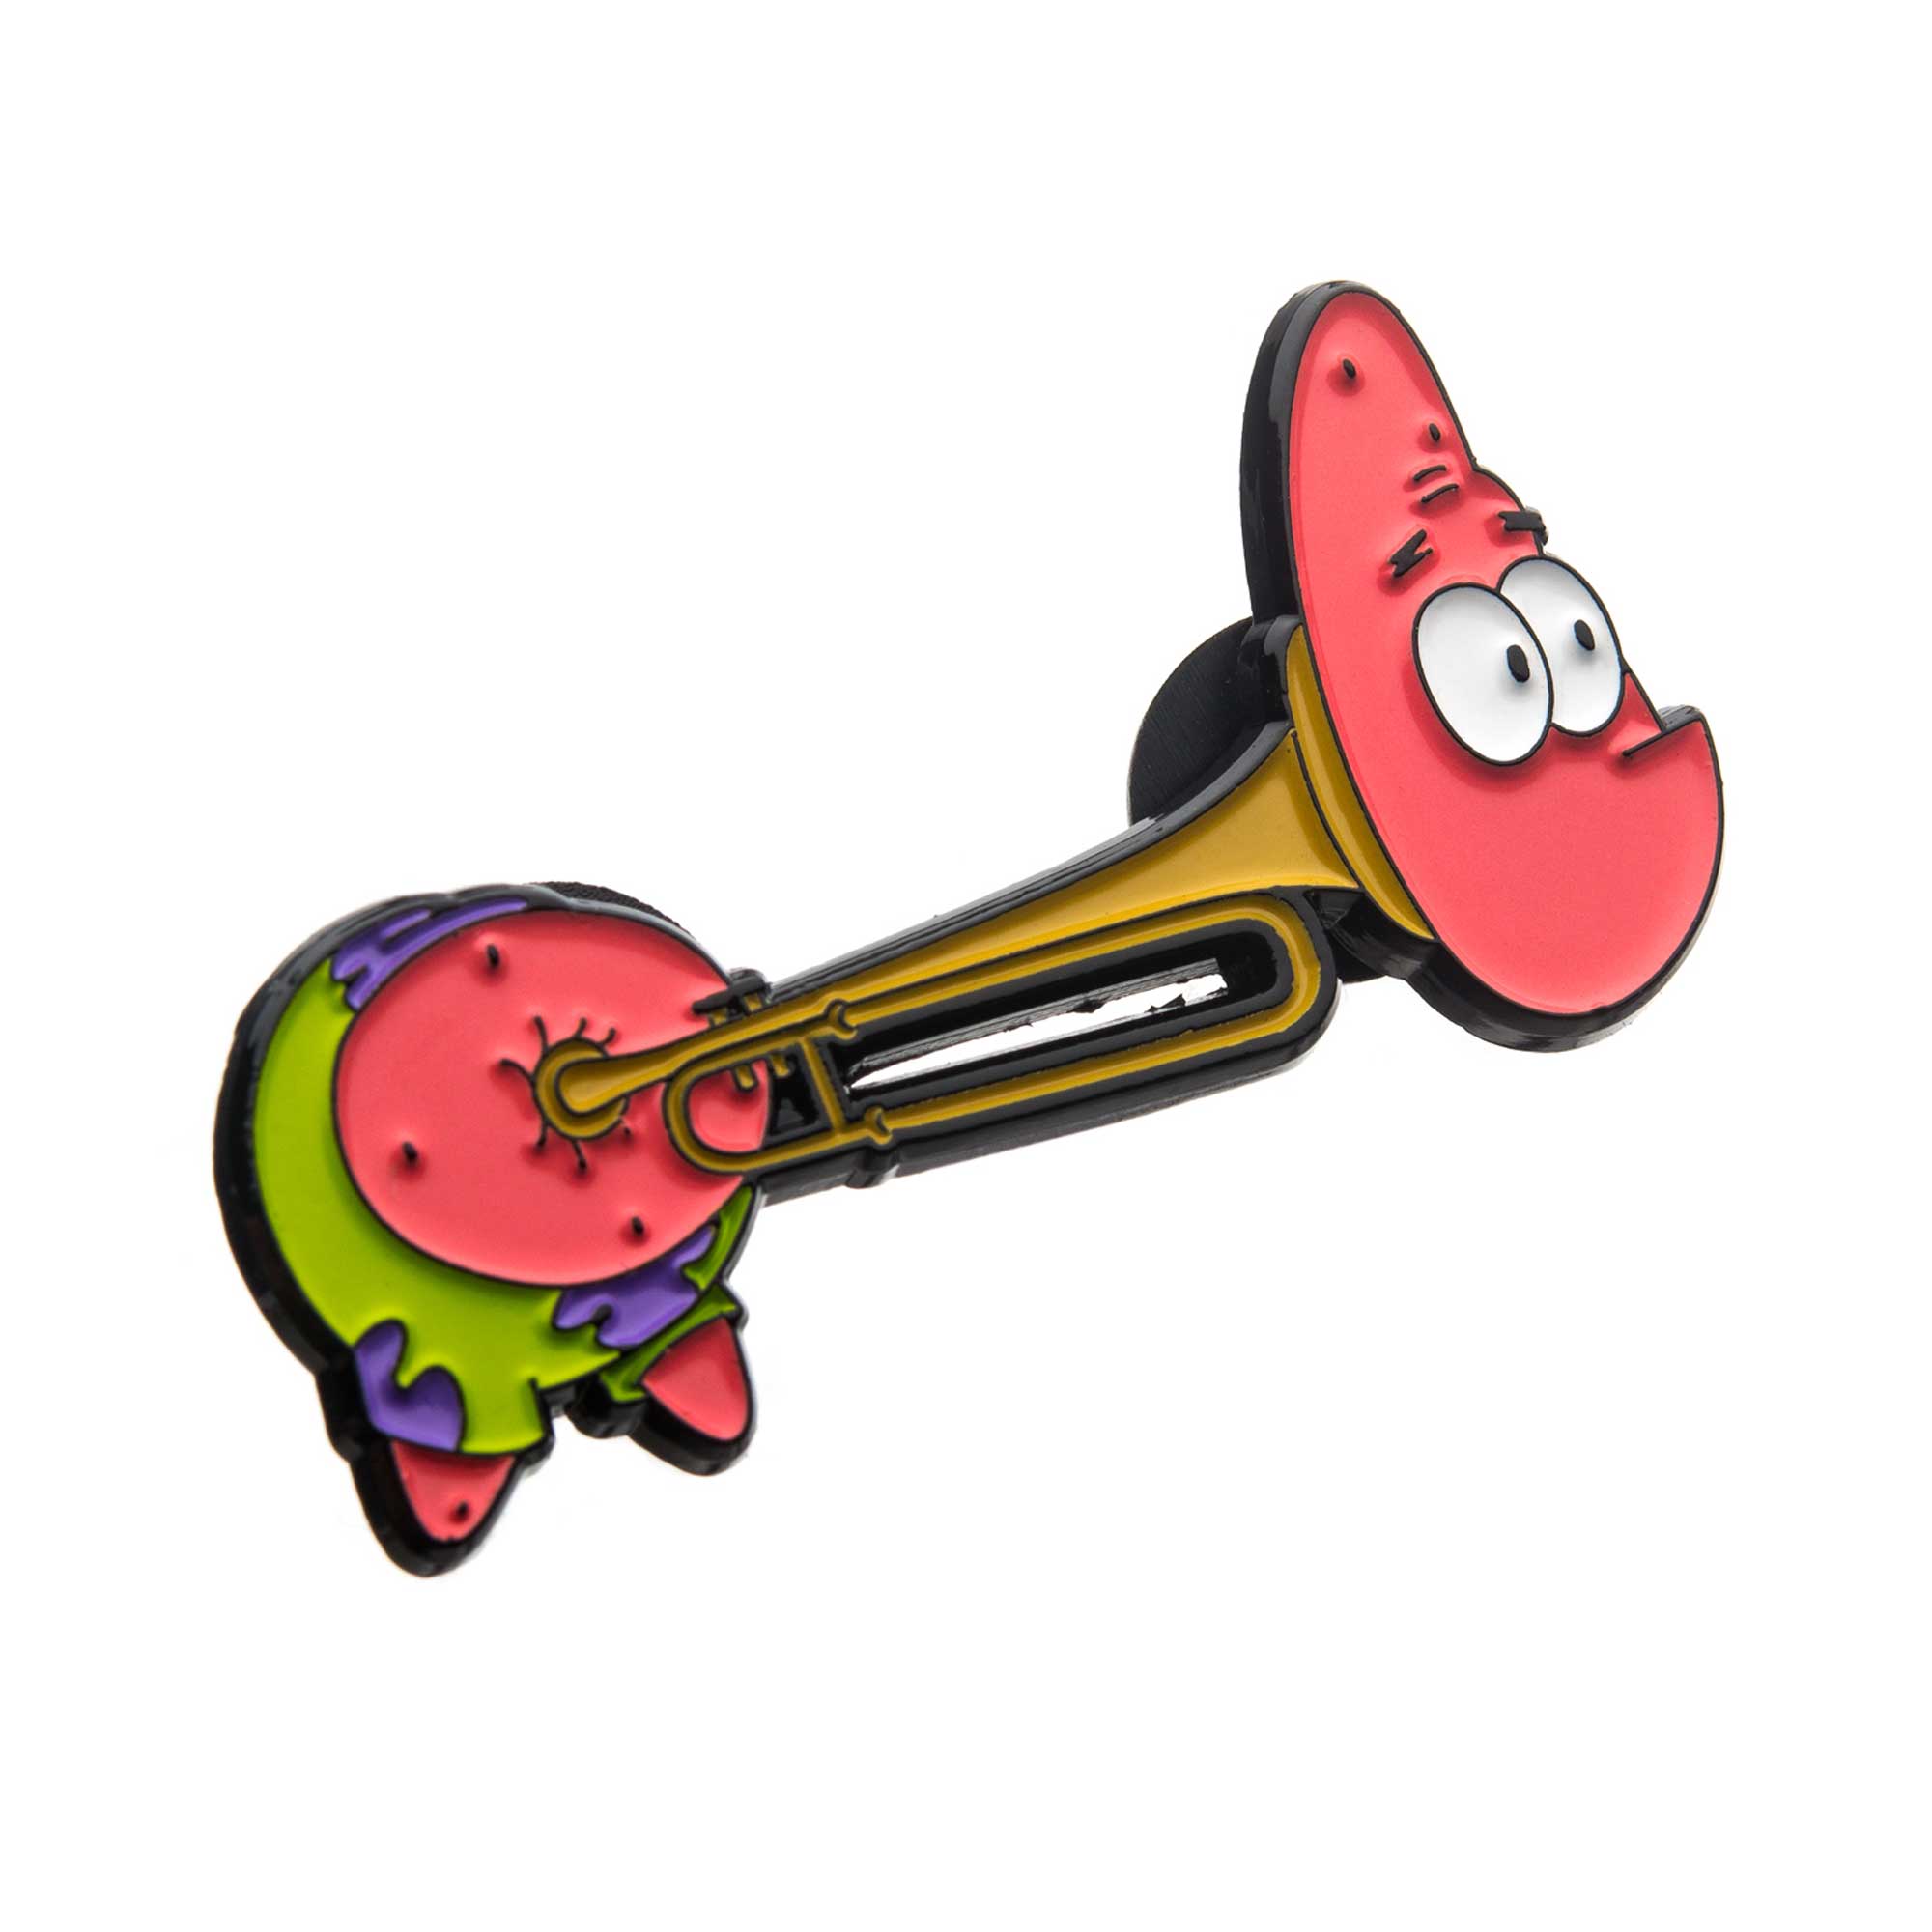 Nickelodeon Patrick Inside the Trombone Lapel Pin [COMING SOON]